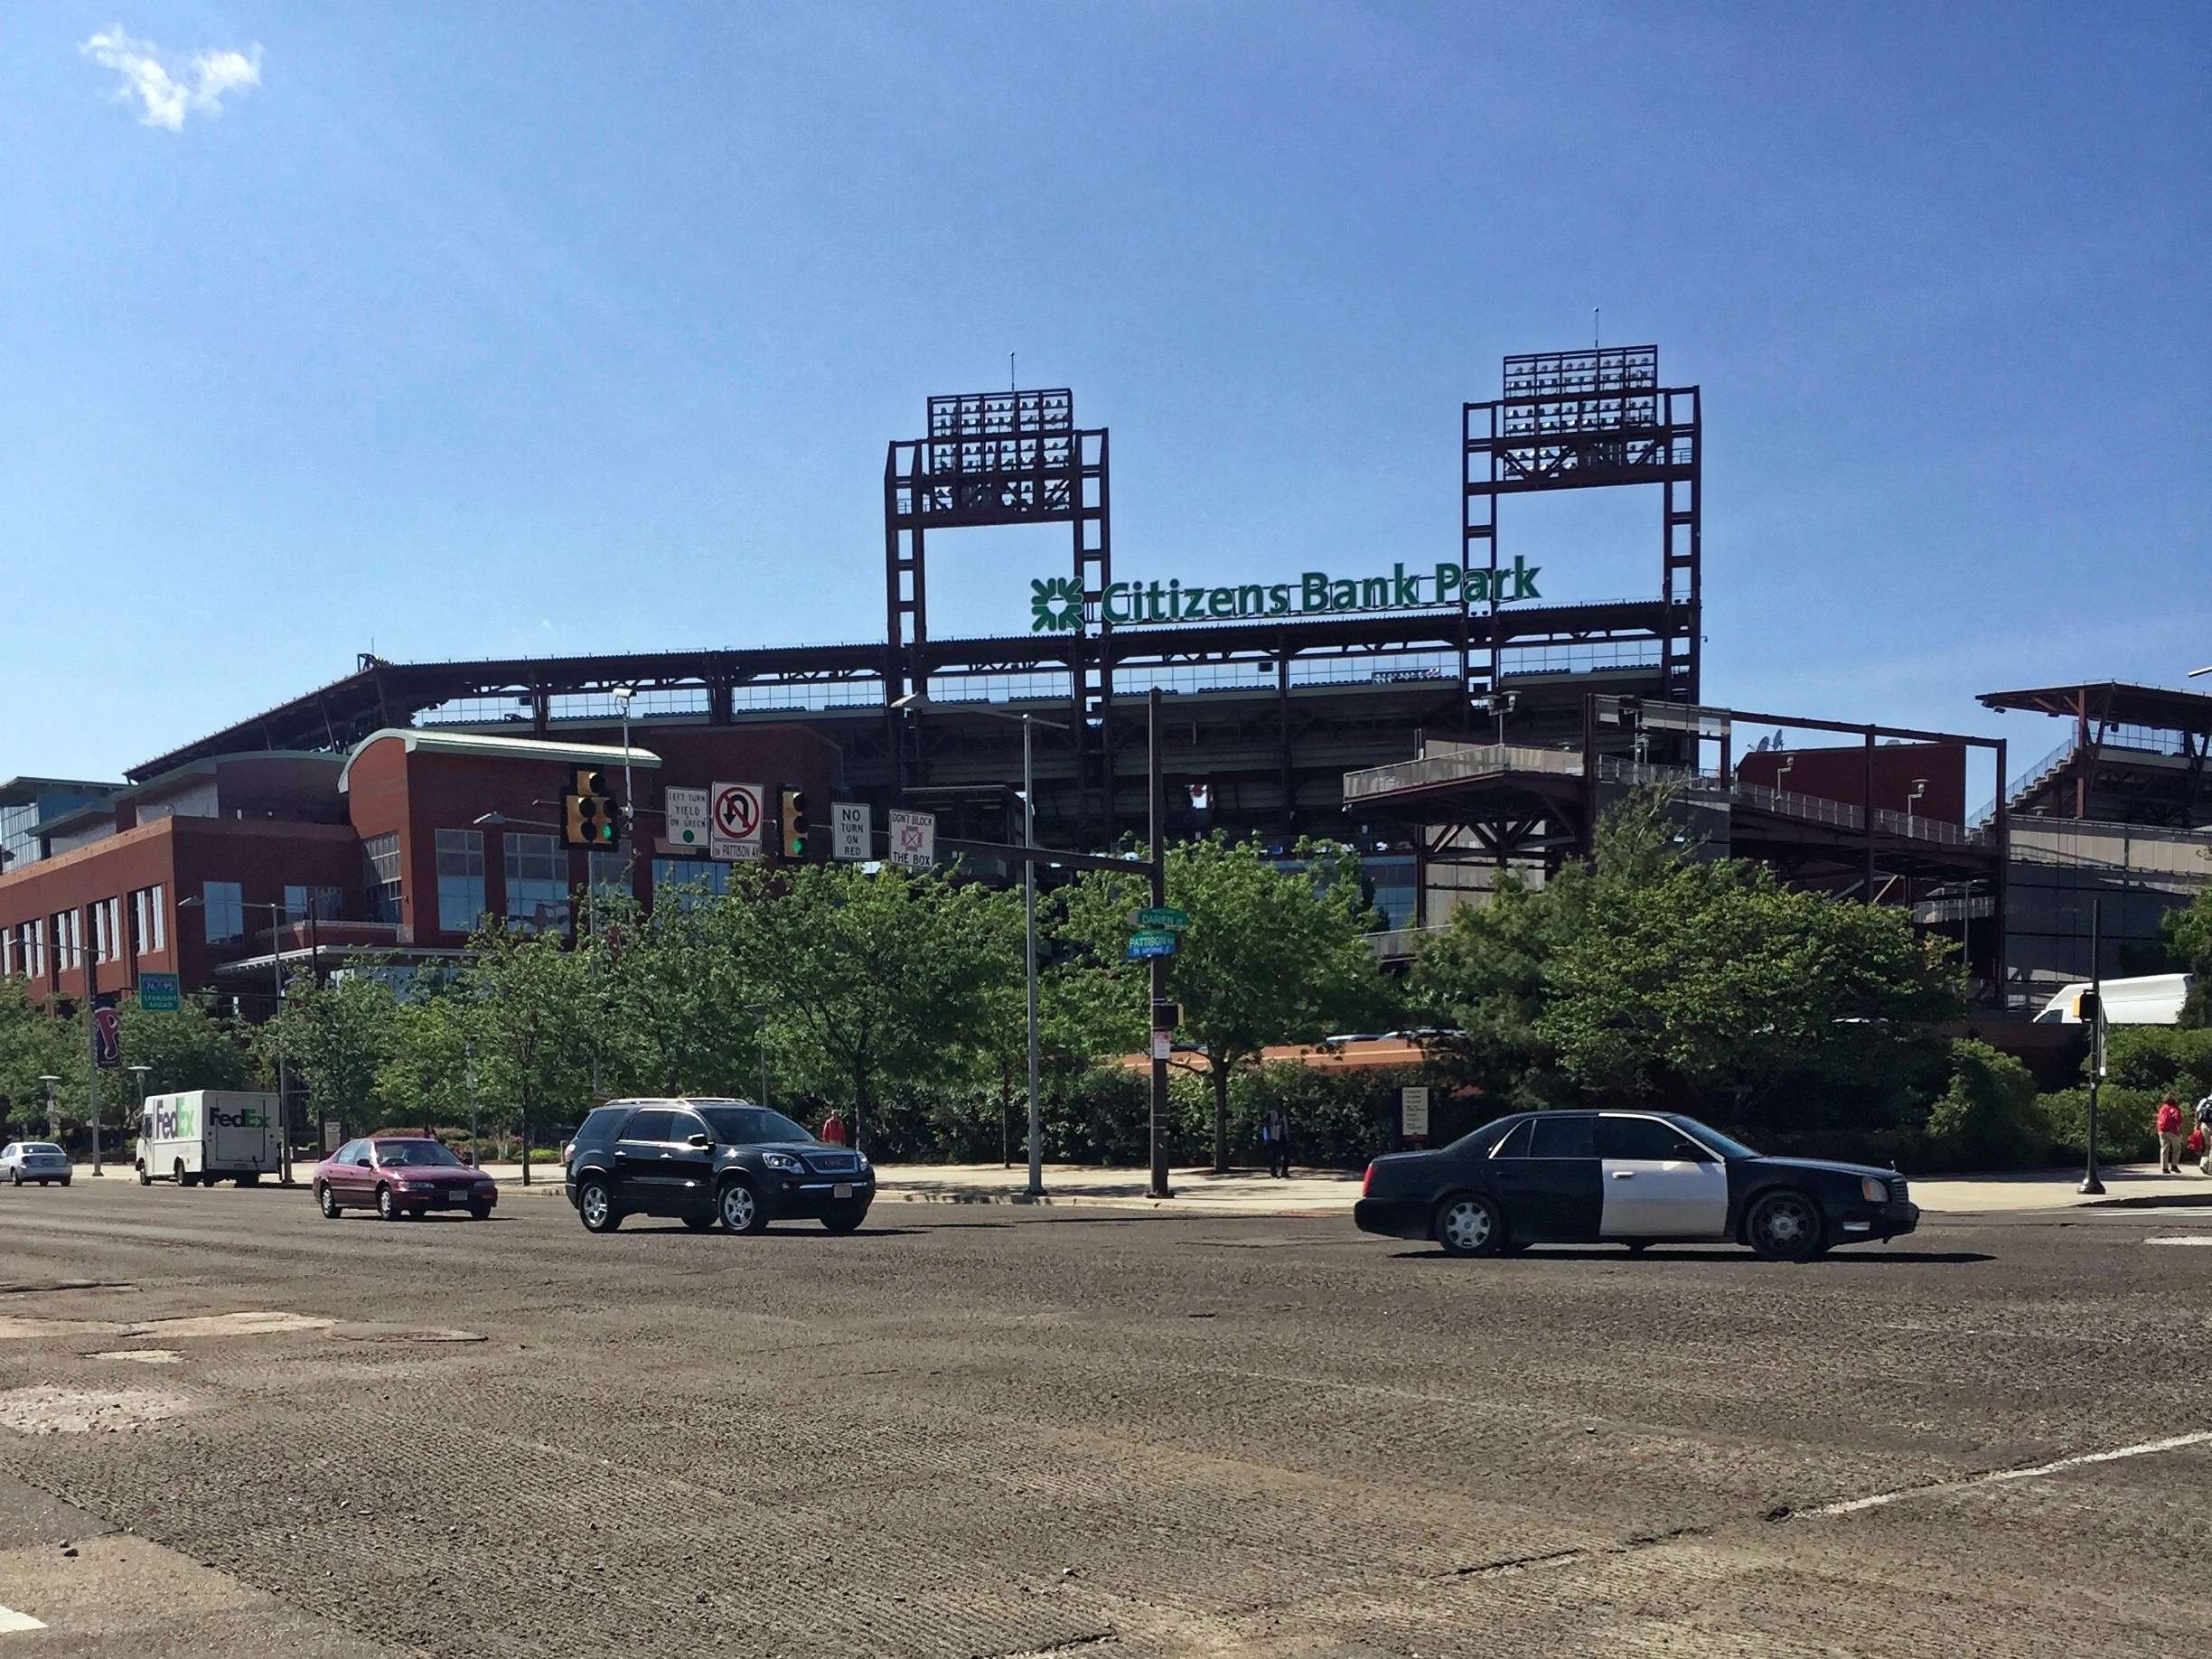 Citizens Bank Park Directions & Parking - Ballparks of Baseball